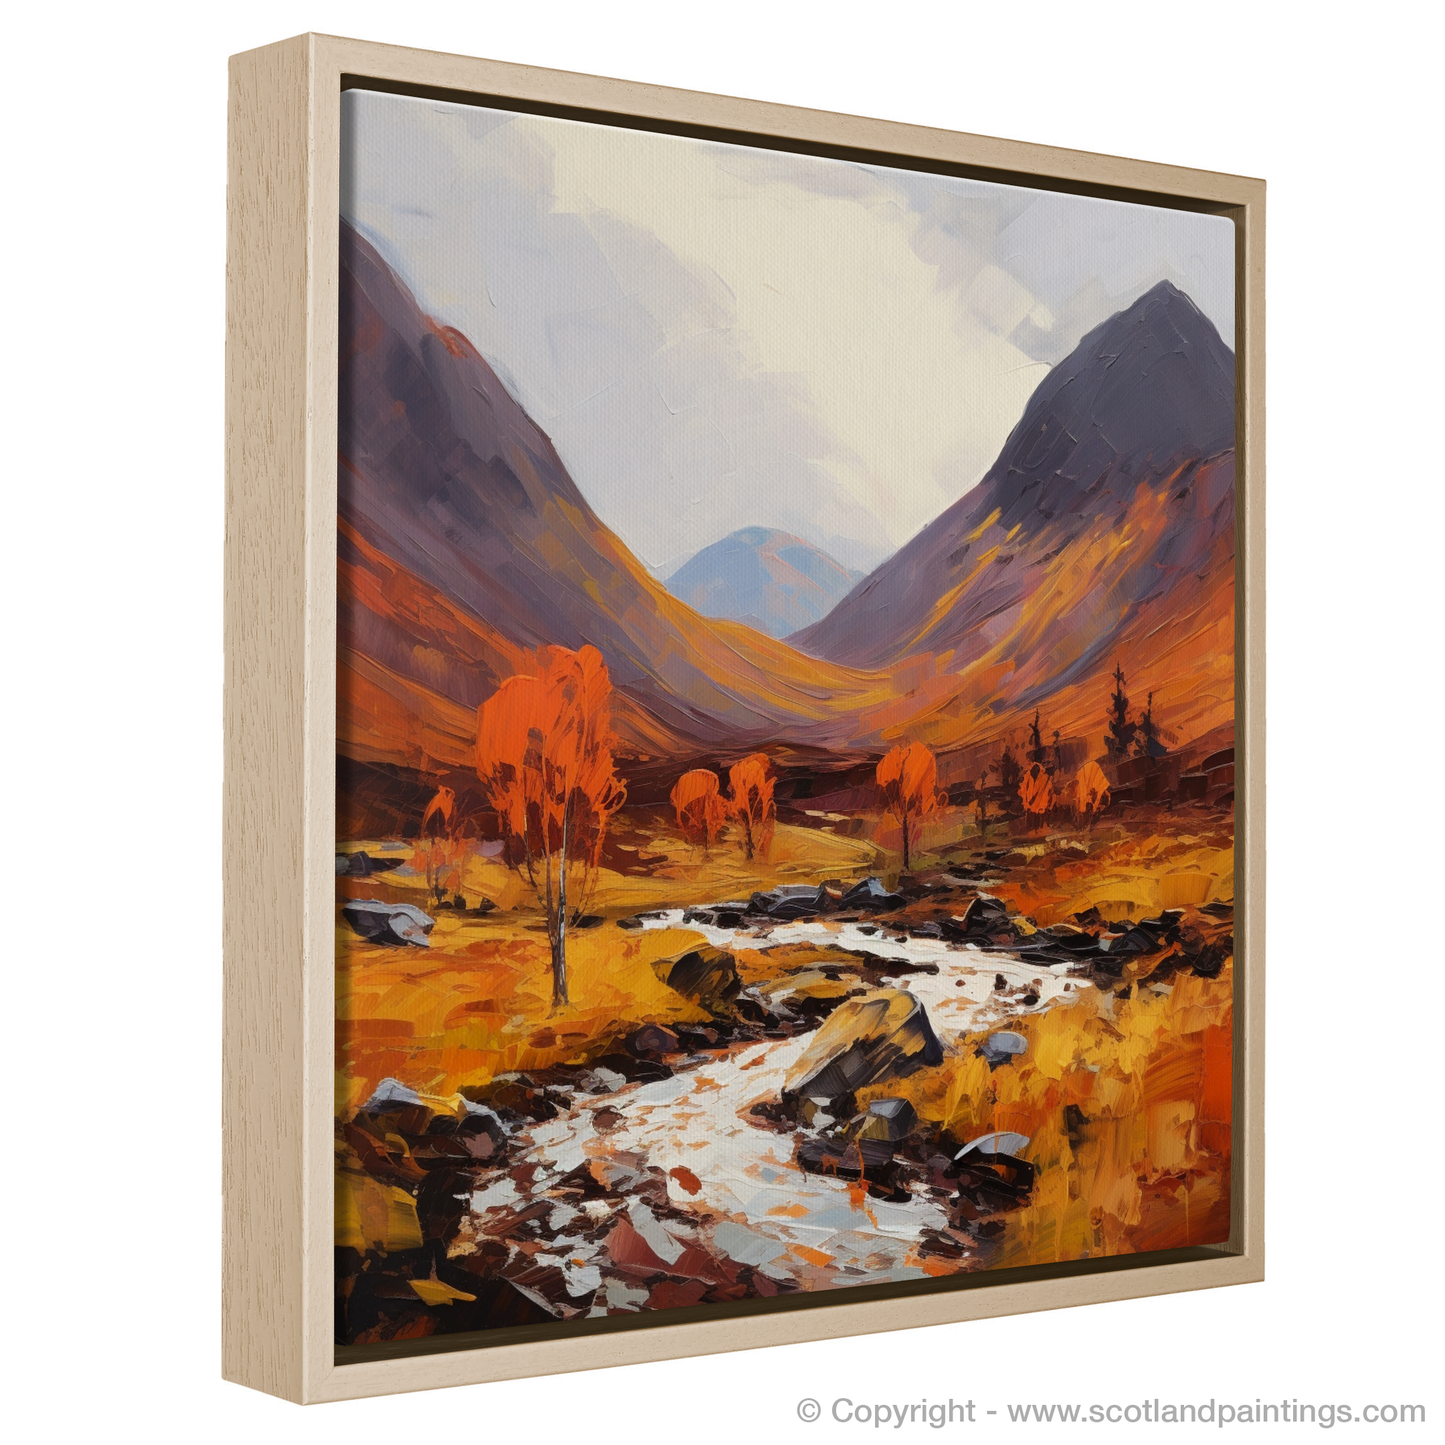 Painting and Art Print of Autumn hues in Glencoe entitled "Autumnal Majesty of Glencoe".